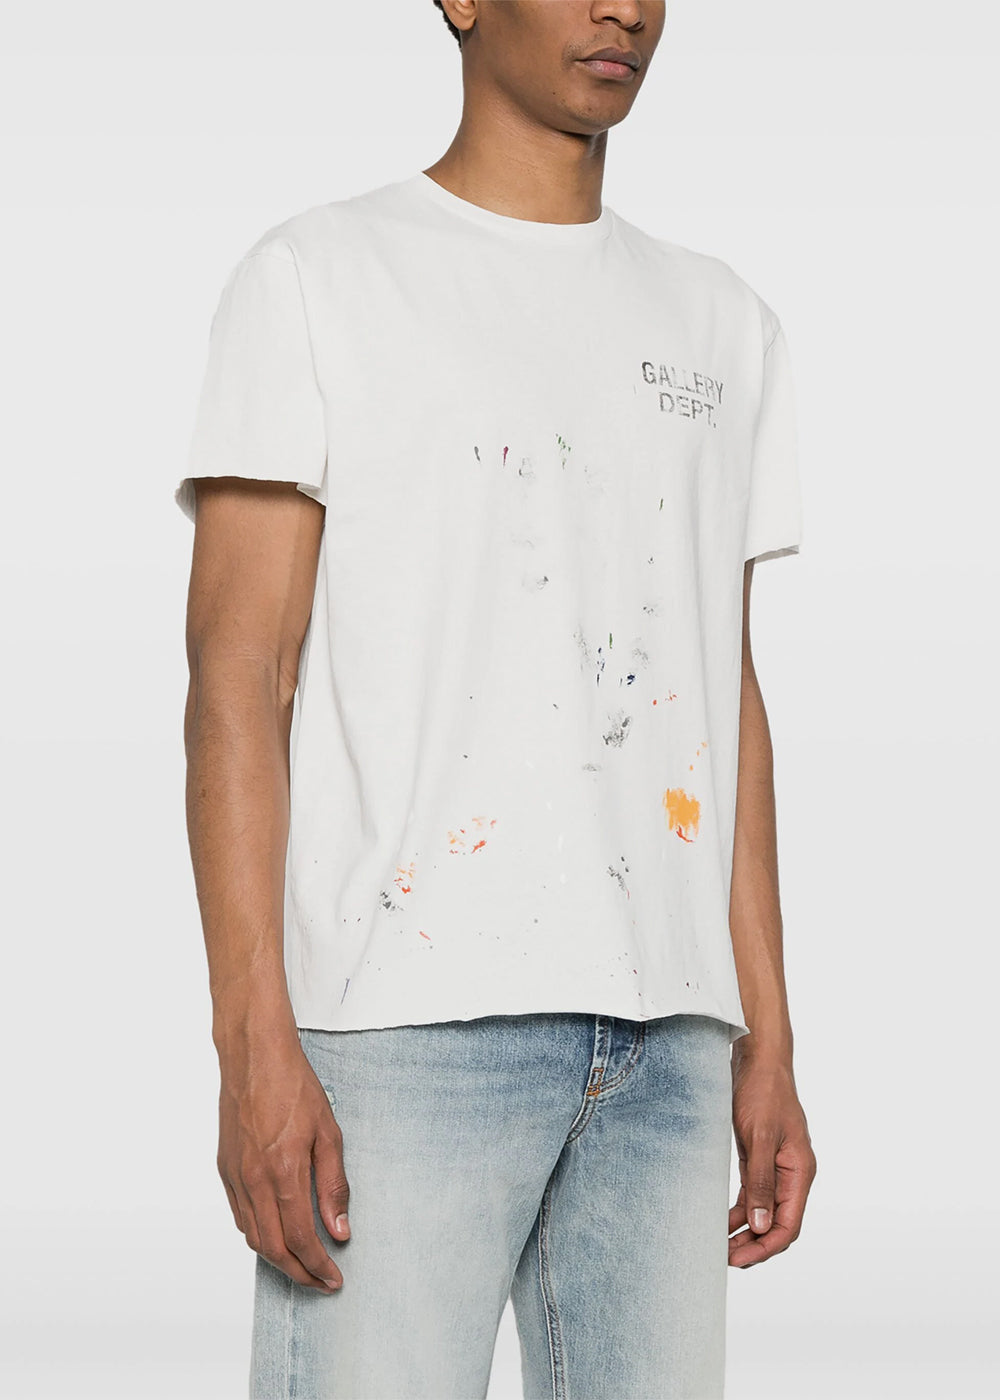 GALLERY DEPT. White Boardwalk T-shirt